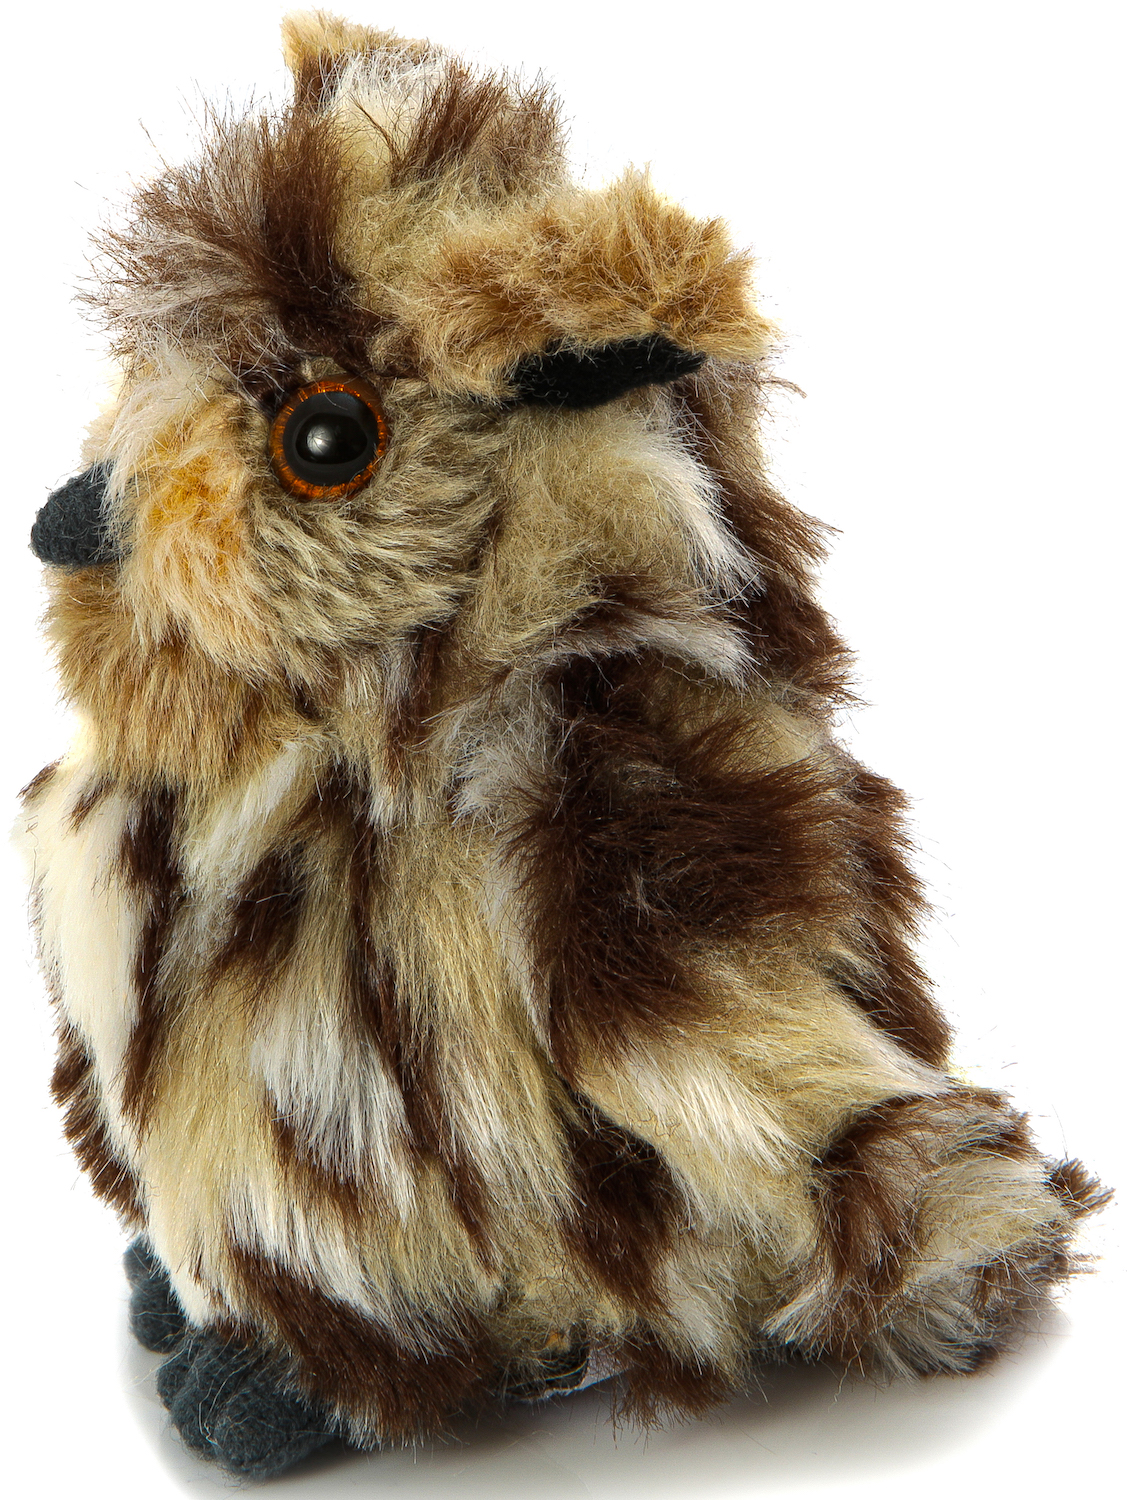 Virginia eagle owl plushie - 'Horned owl' - 13 cm (height)